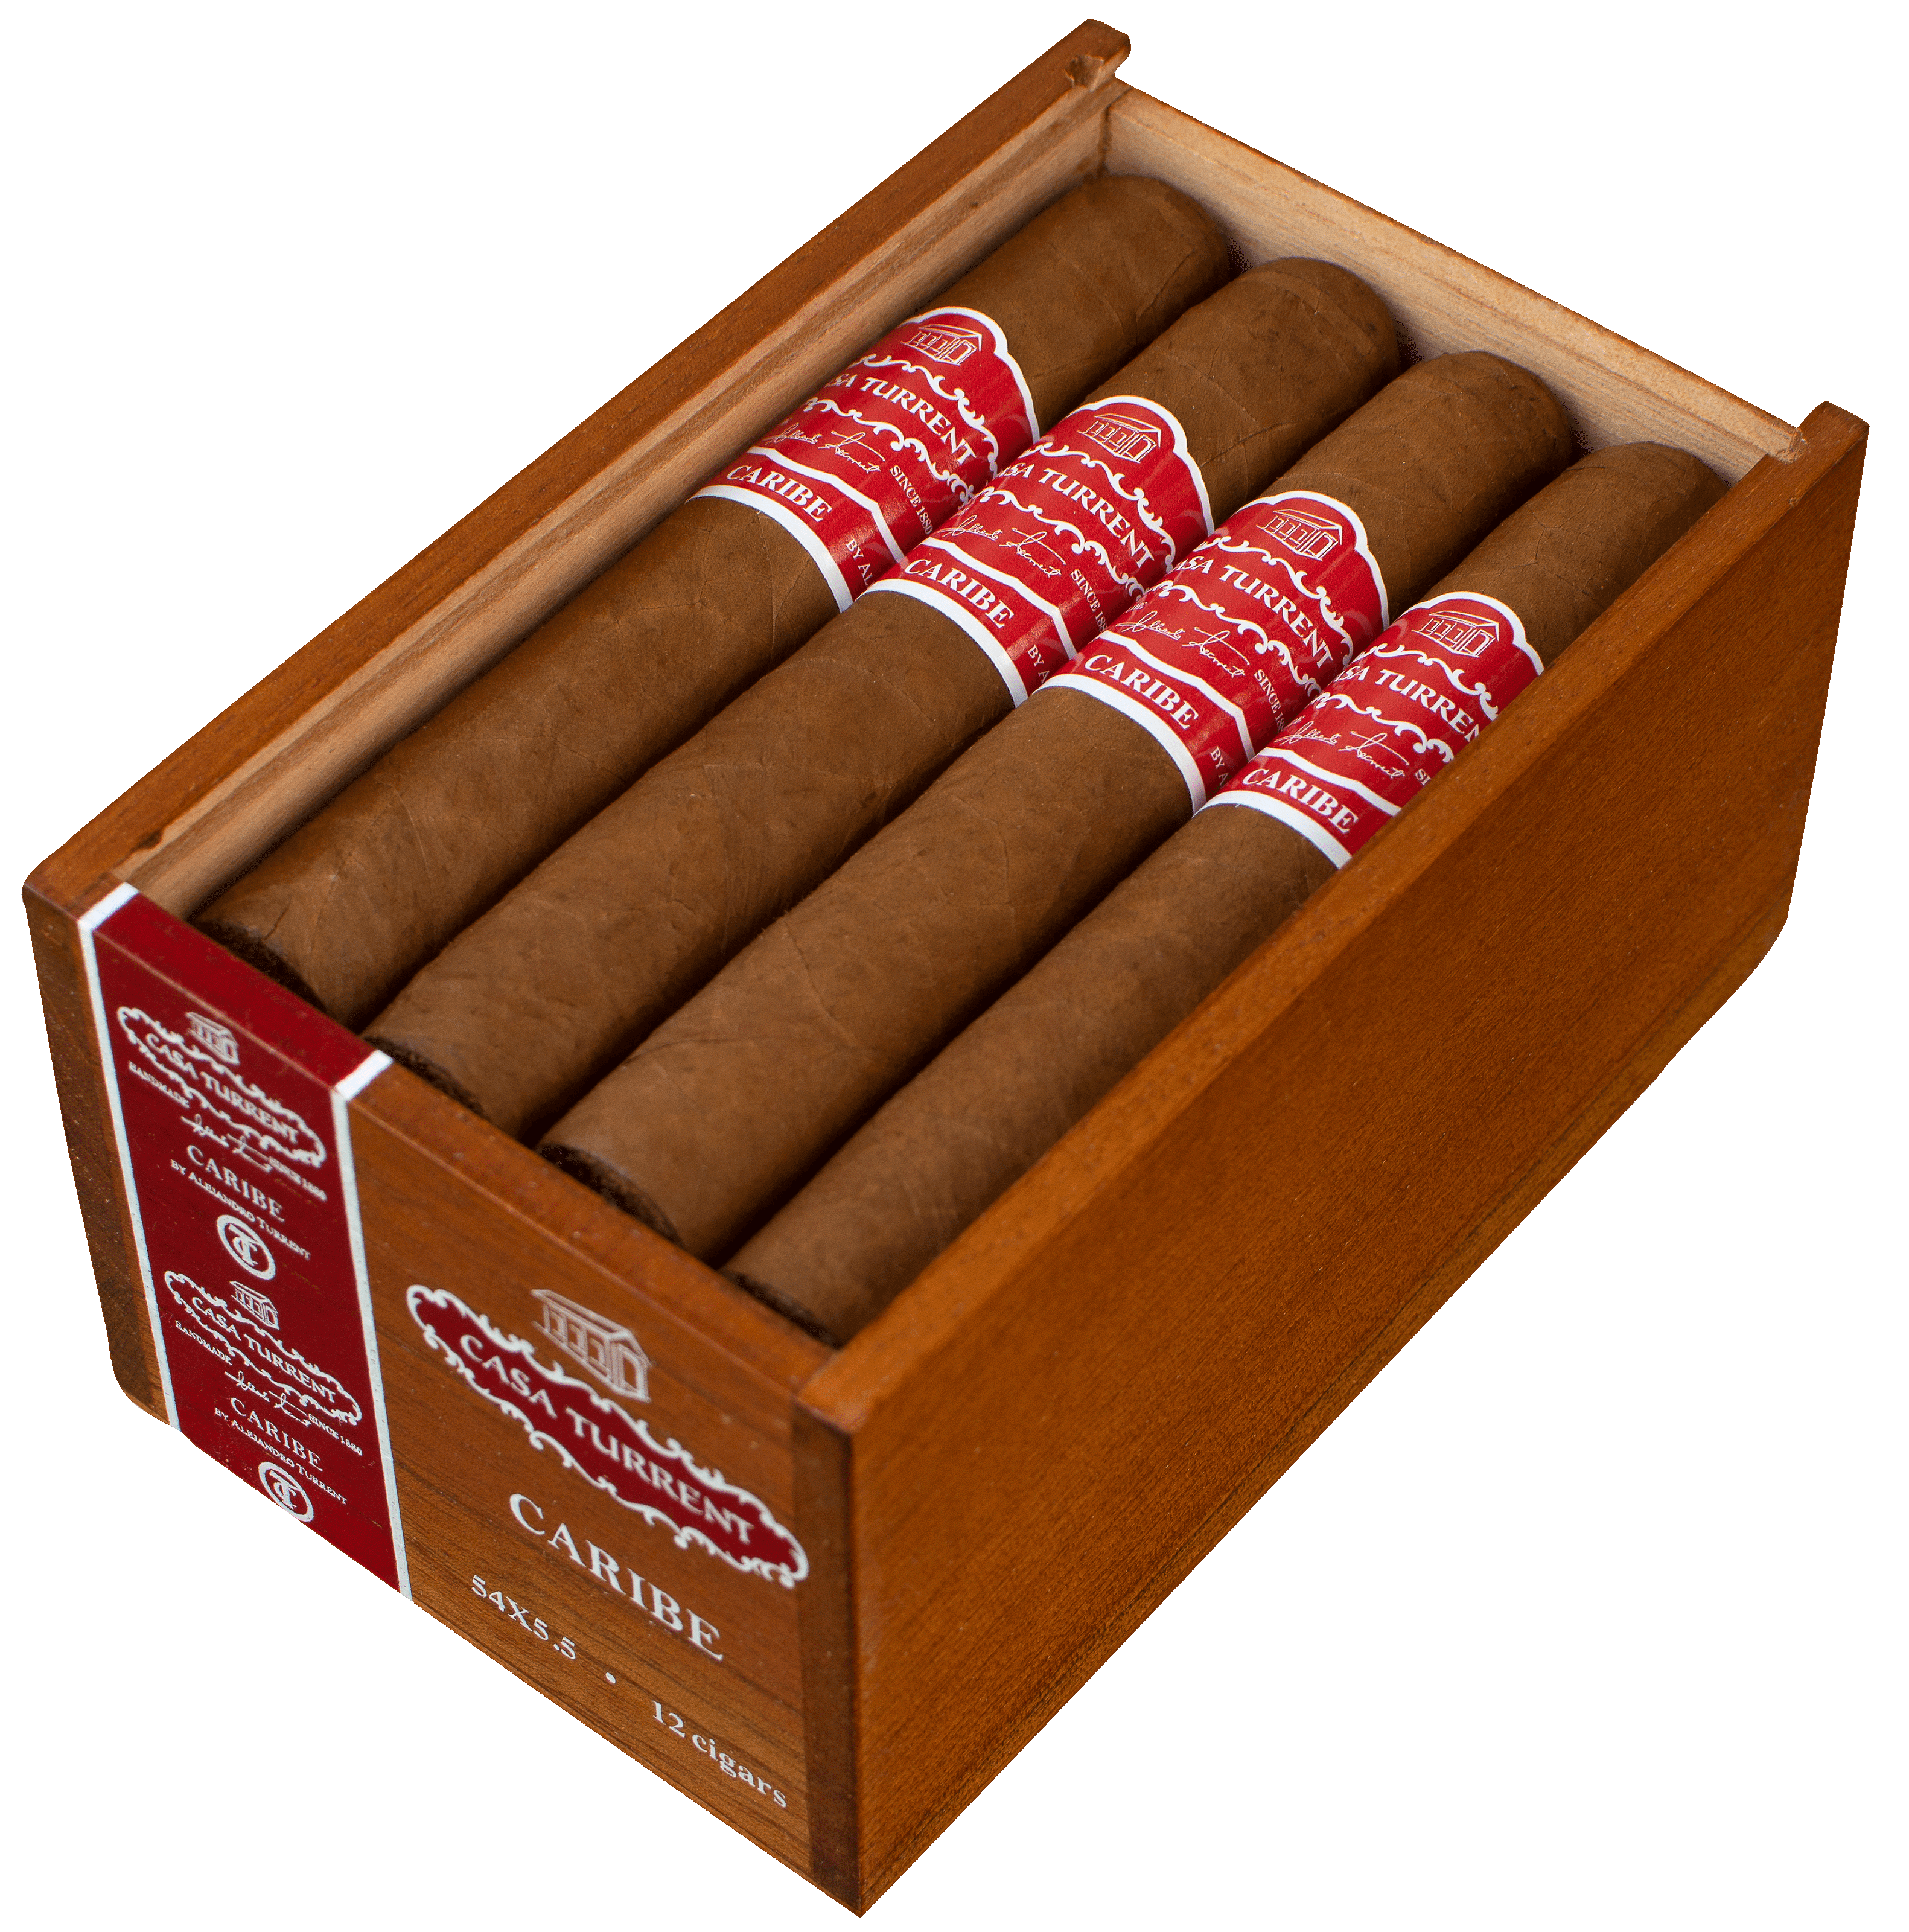 12er Kiste Casa Turrent Origen Caribe obusto Extra Zigarren, Box geöffnet